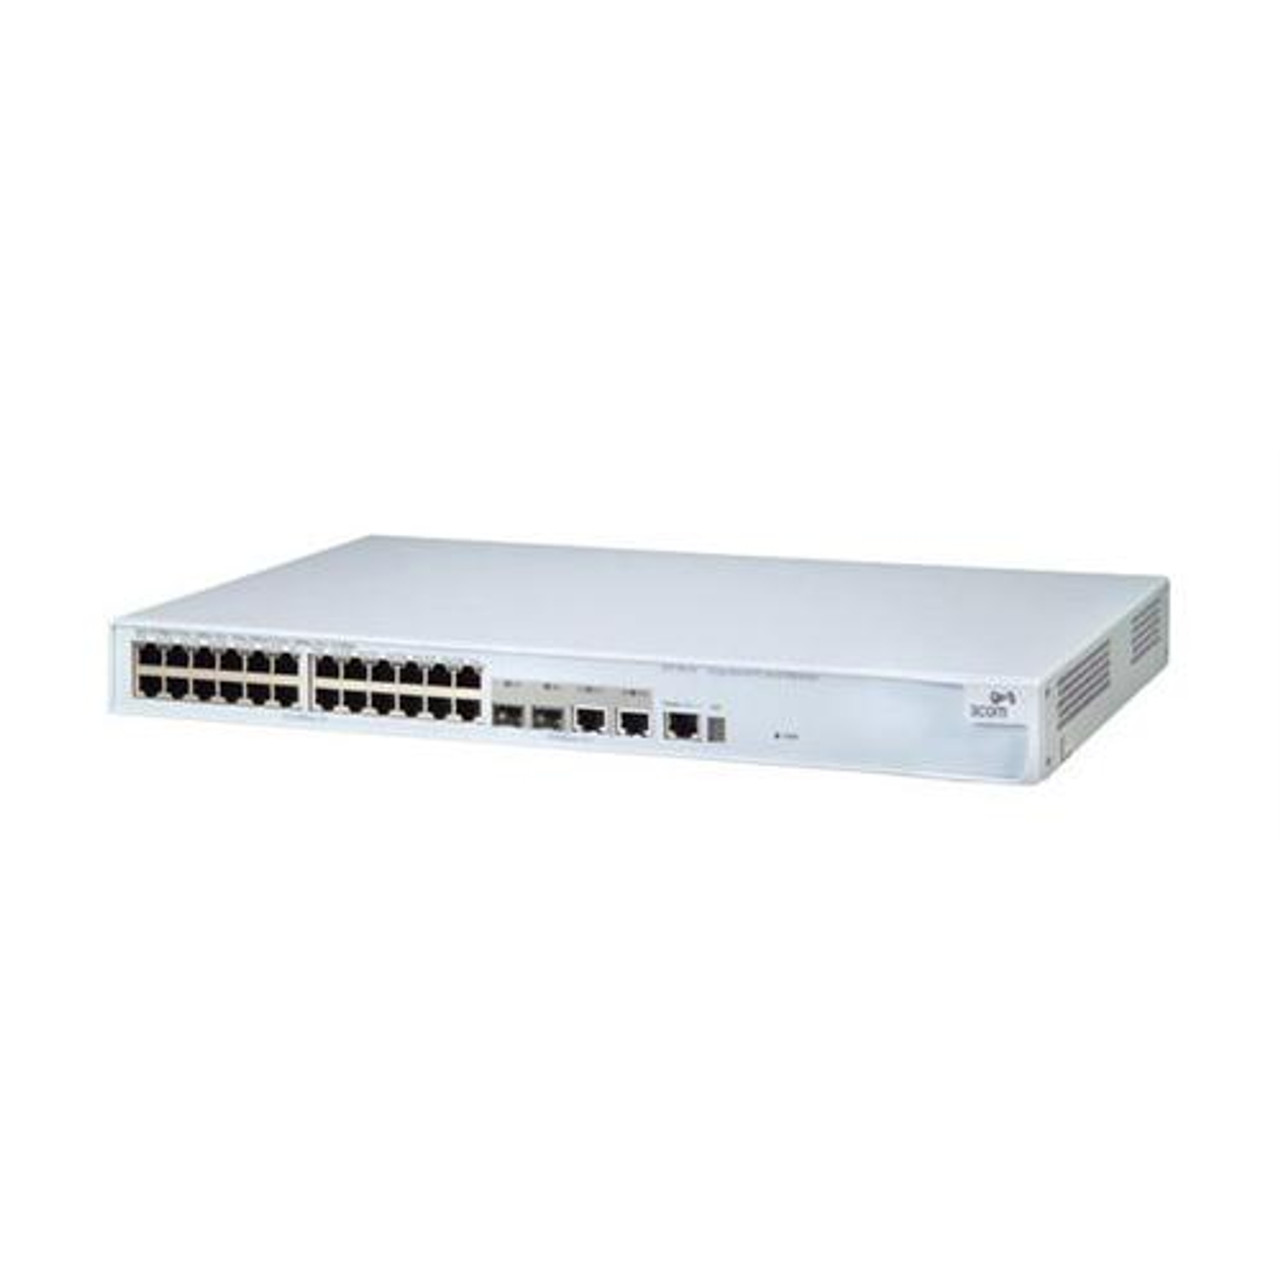 JE045A#ABA HP ProCurve E4500-24 24-Ports SFP Layer-3 Managed Stackable Gigabit Ethernet Switch Rack Mountable (Refurbished)